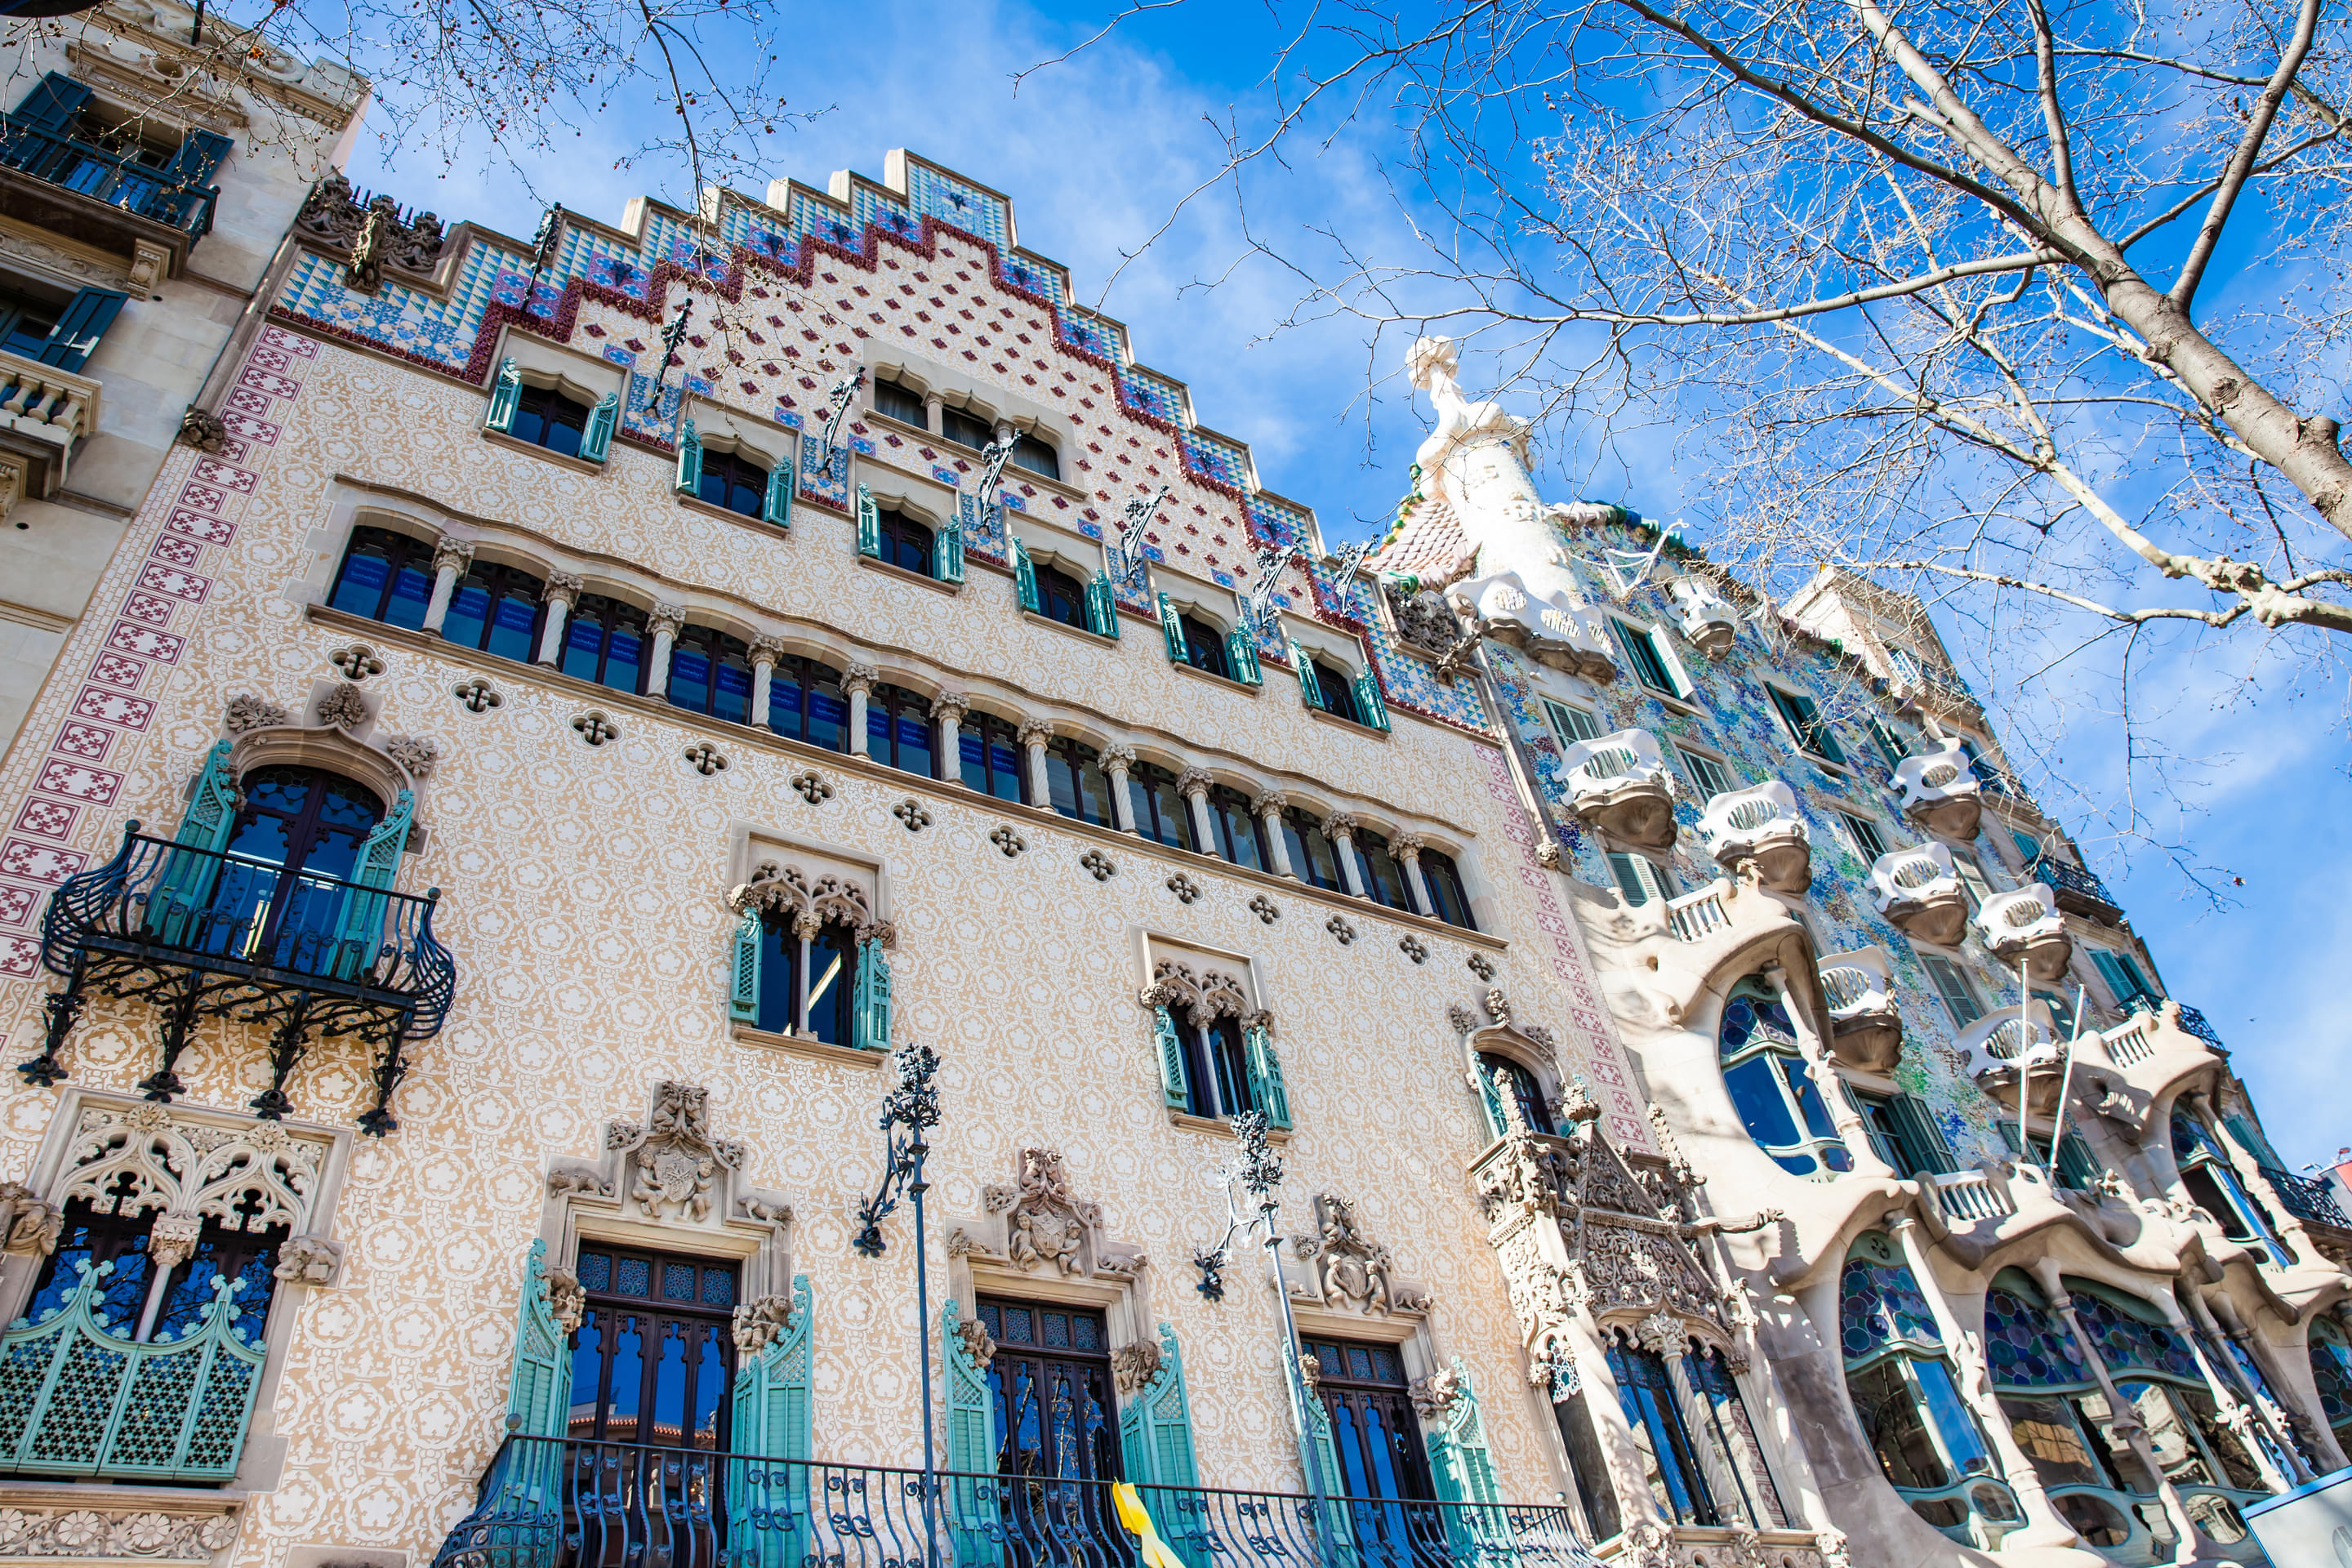 Casa Amatller Barcelona Overview